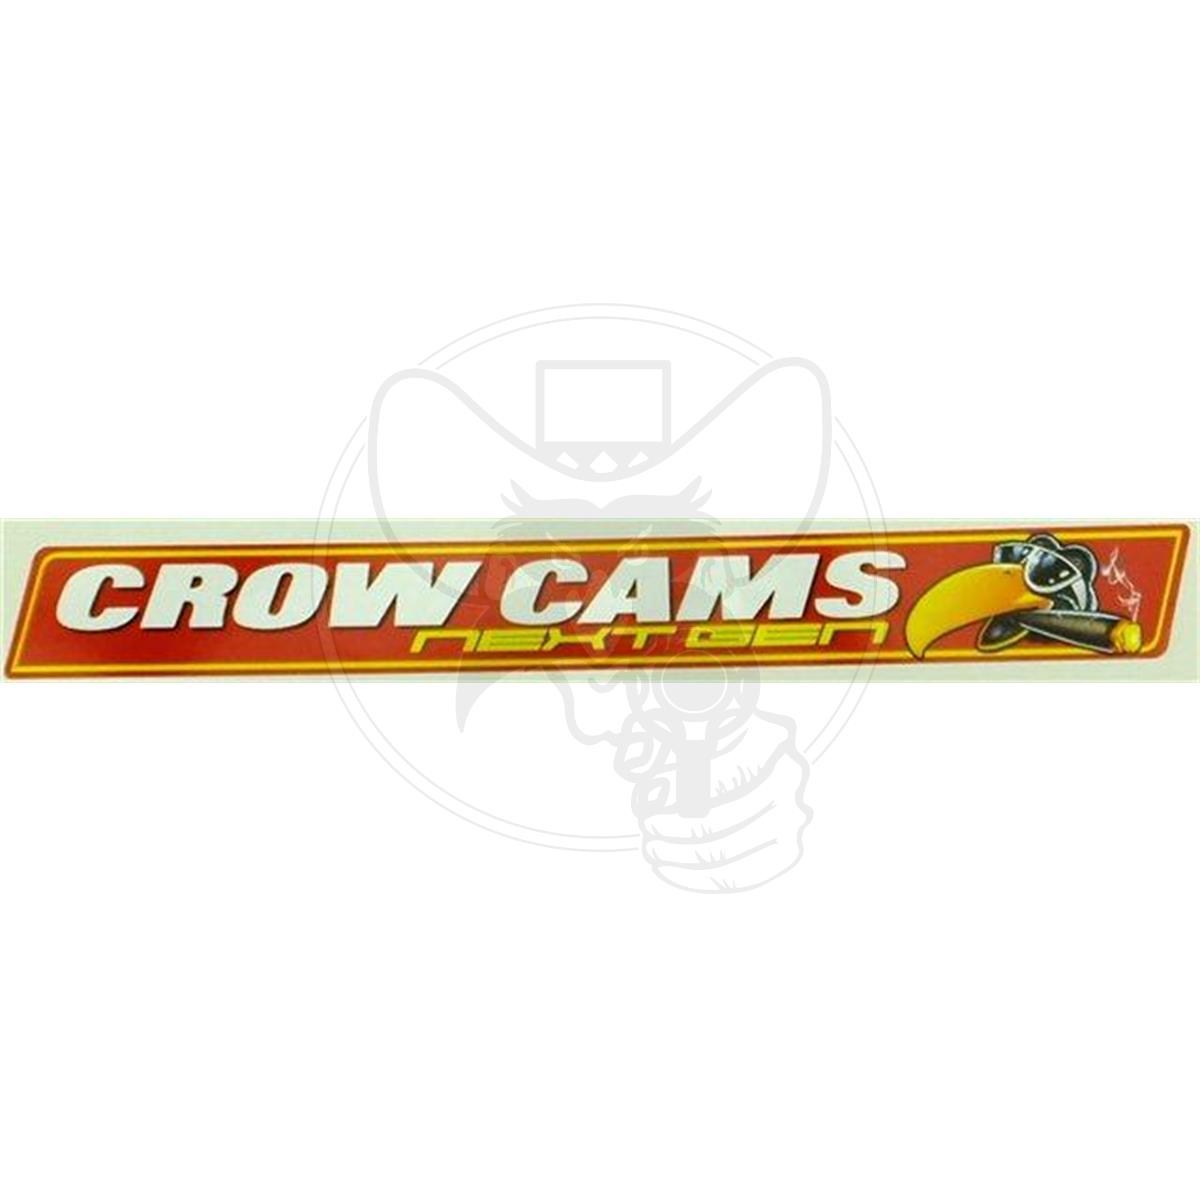 CROW CAMS STICKER - WINDOW DECAL